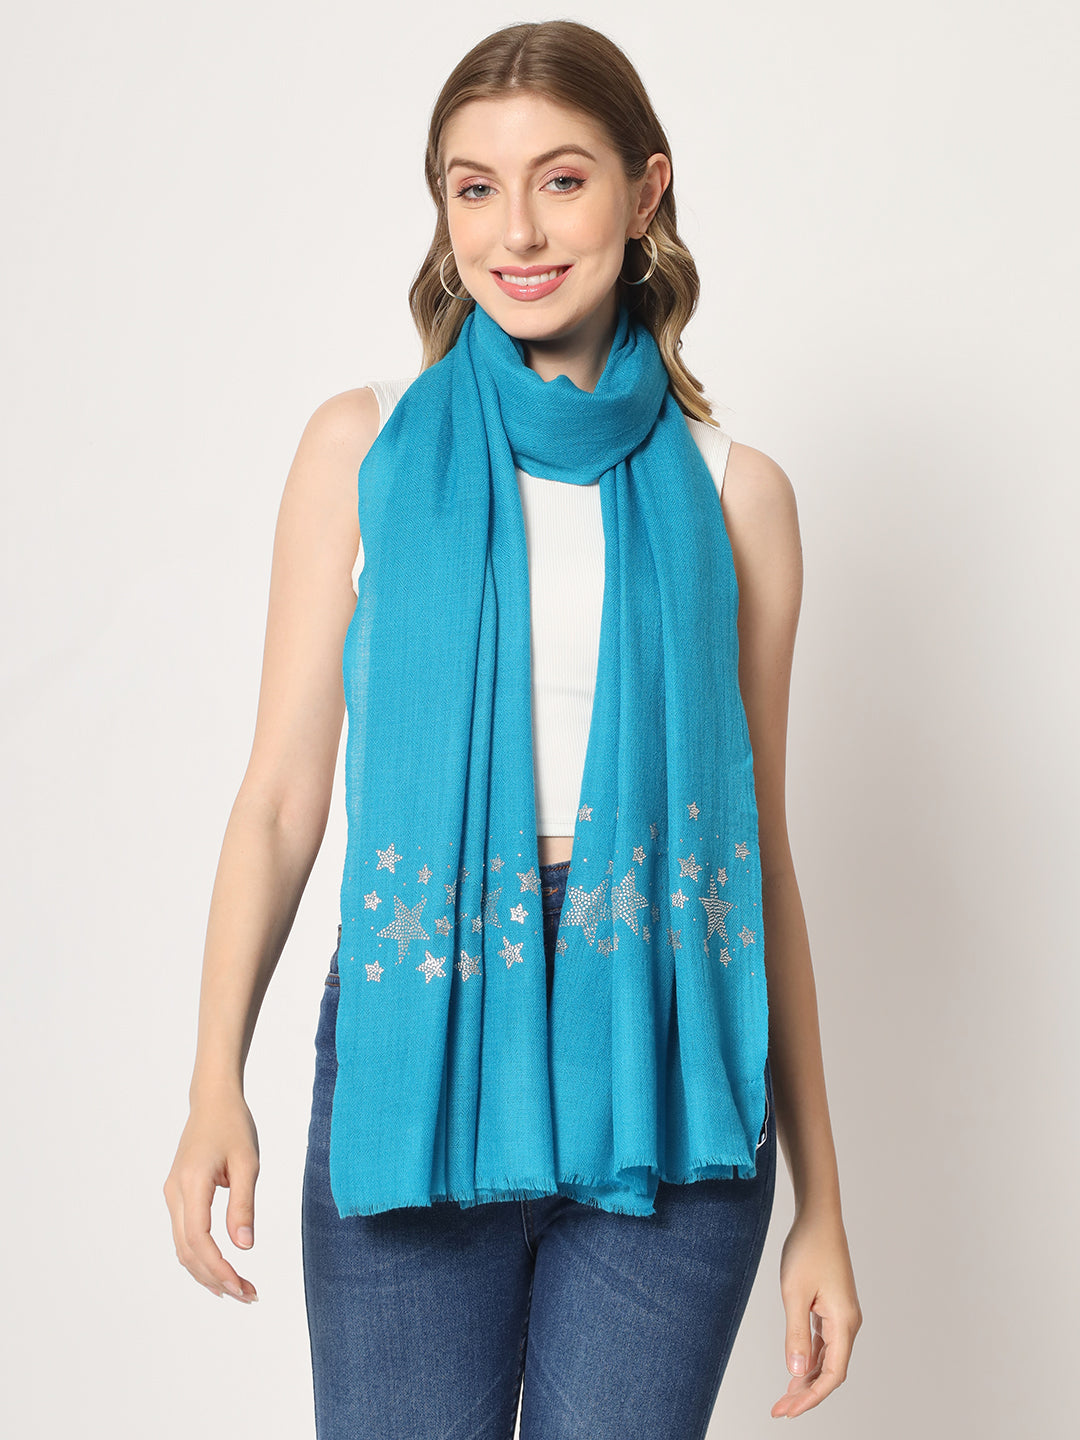 winter stole, woolen scarves for ladies, cashmere shawl